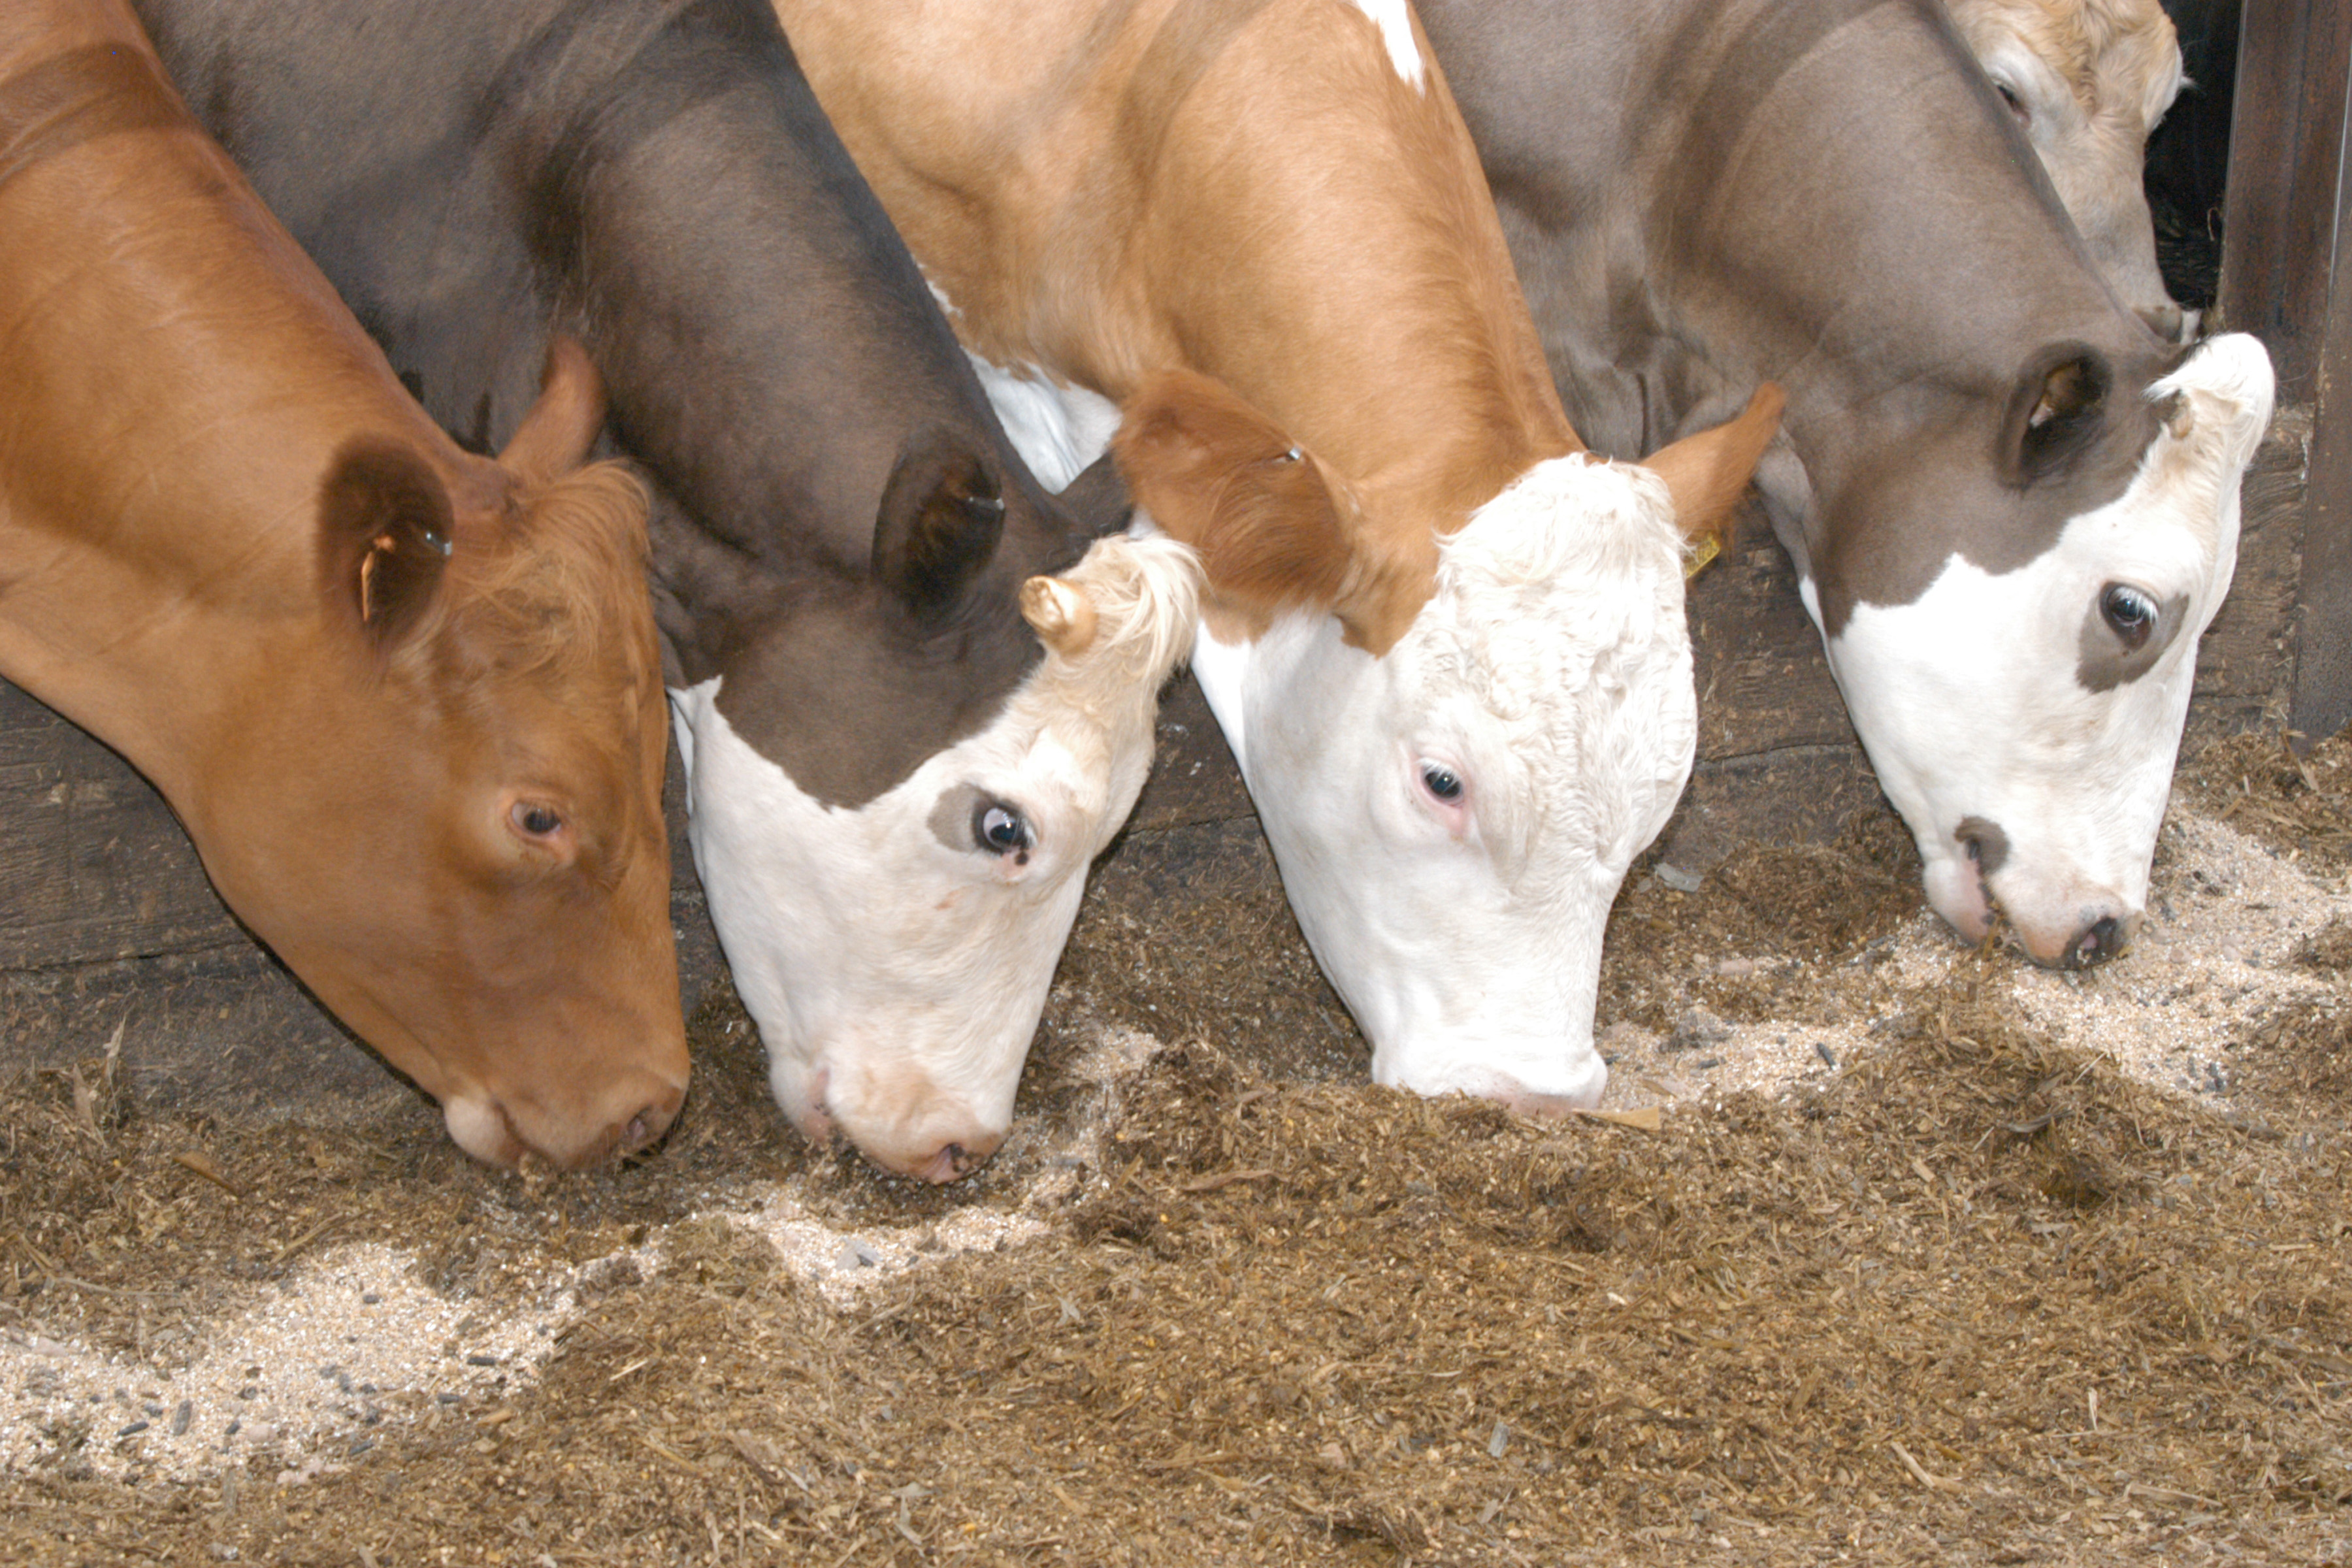 Animal nutrition industry updates from around the world - AgriOrbit